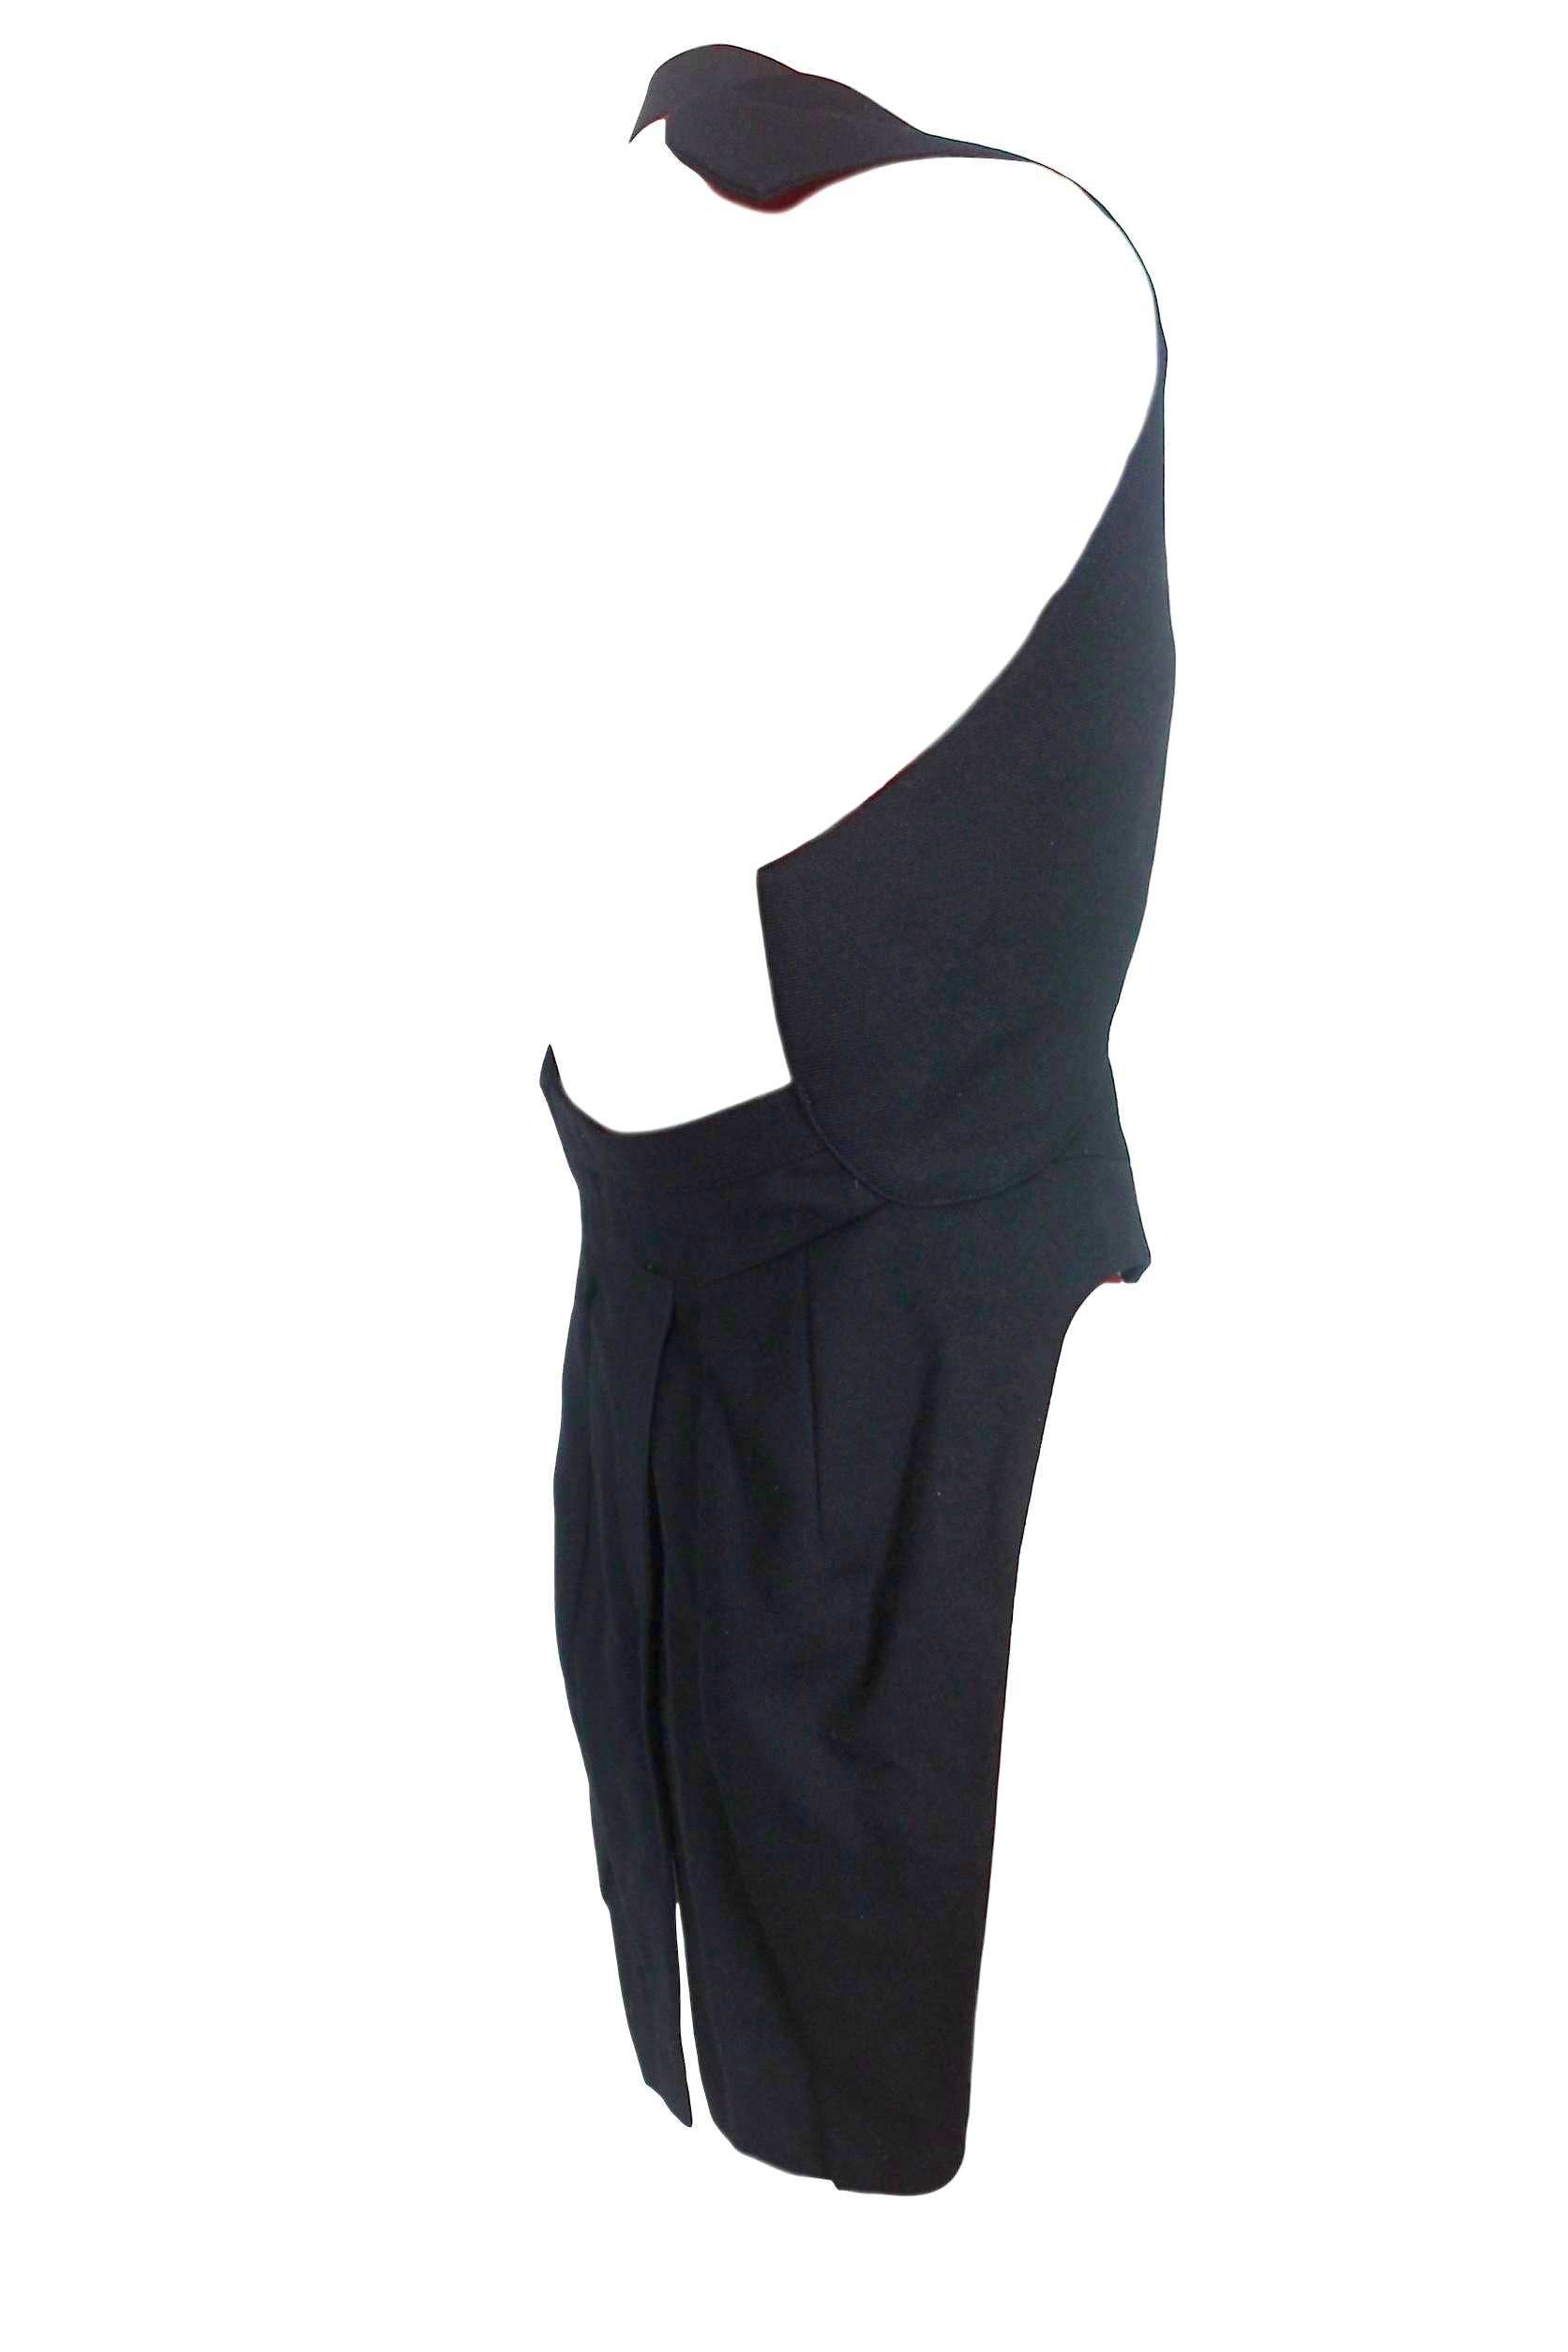 Comme des Garcons 2009 Collection Vest with Tails For Sale 8